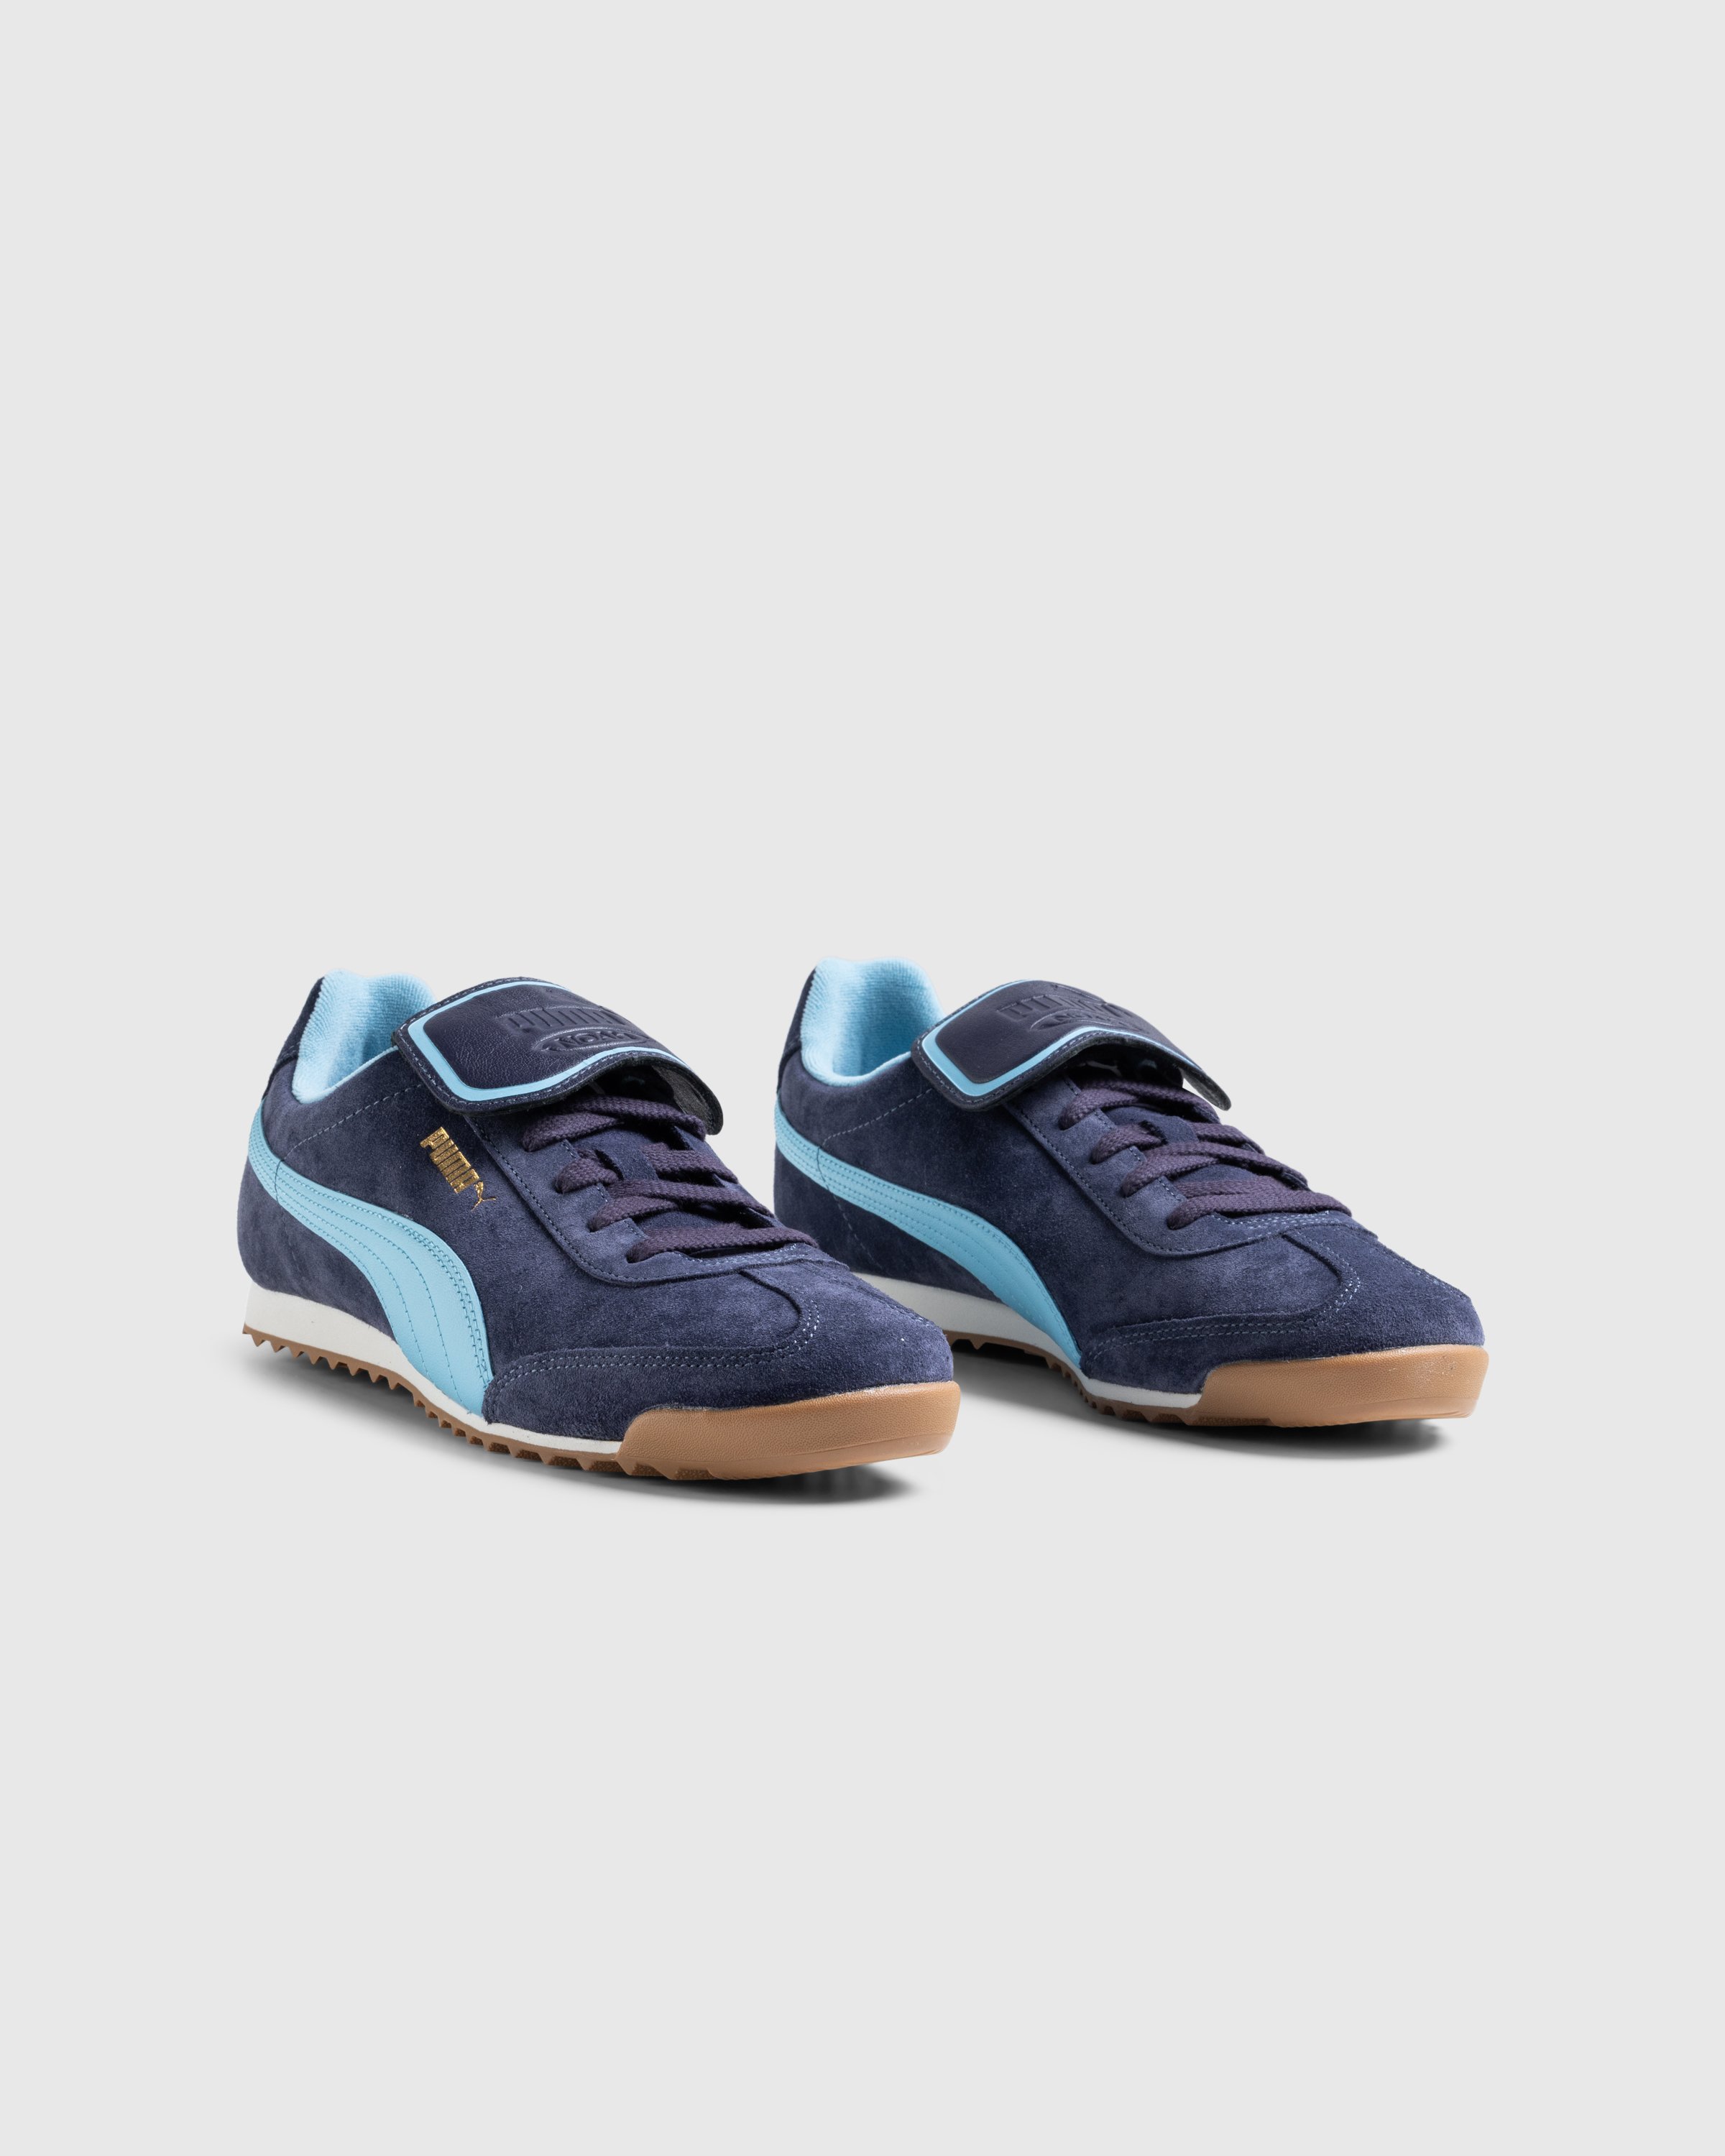 Puma x Noah - Arizona NOAH New Navy-Dusty Aqua - Footwear - Blue - Image 3